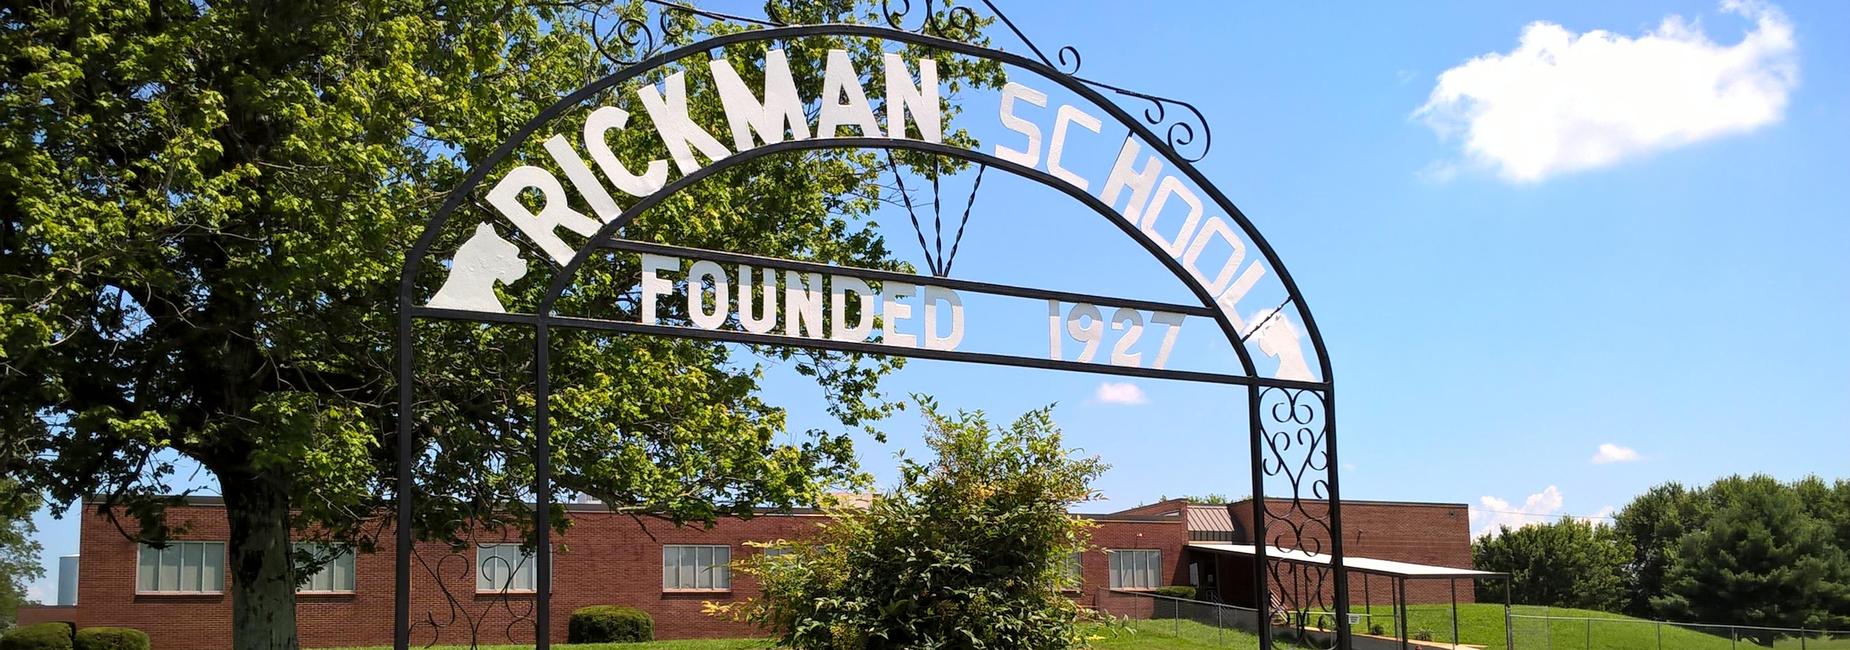 Rickman School Founded 1927